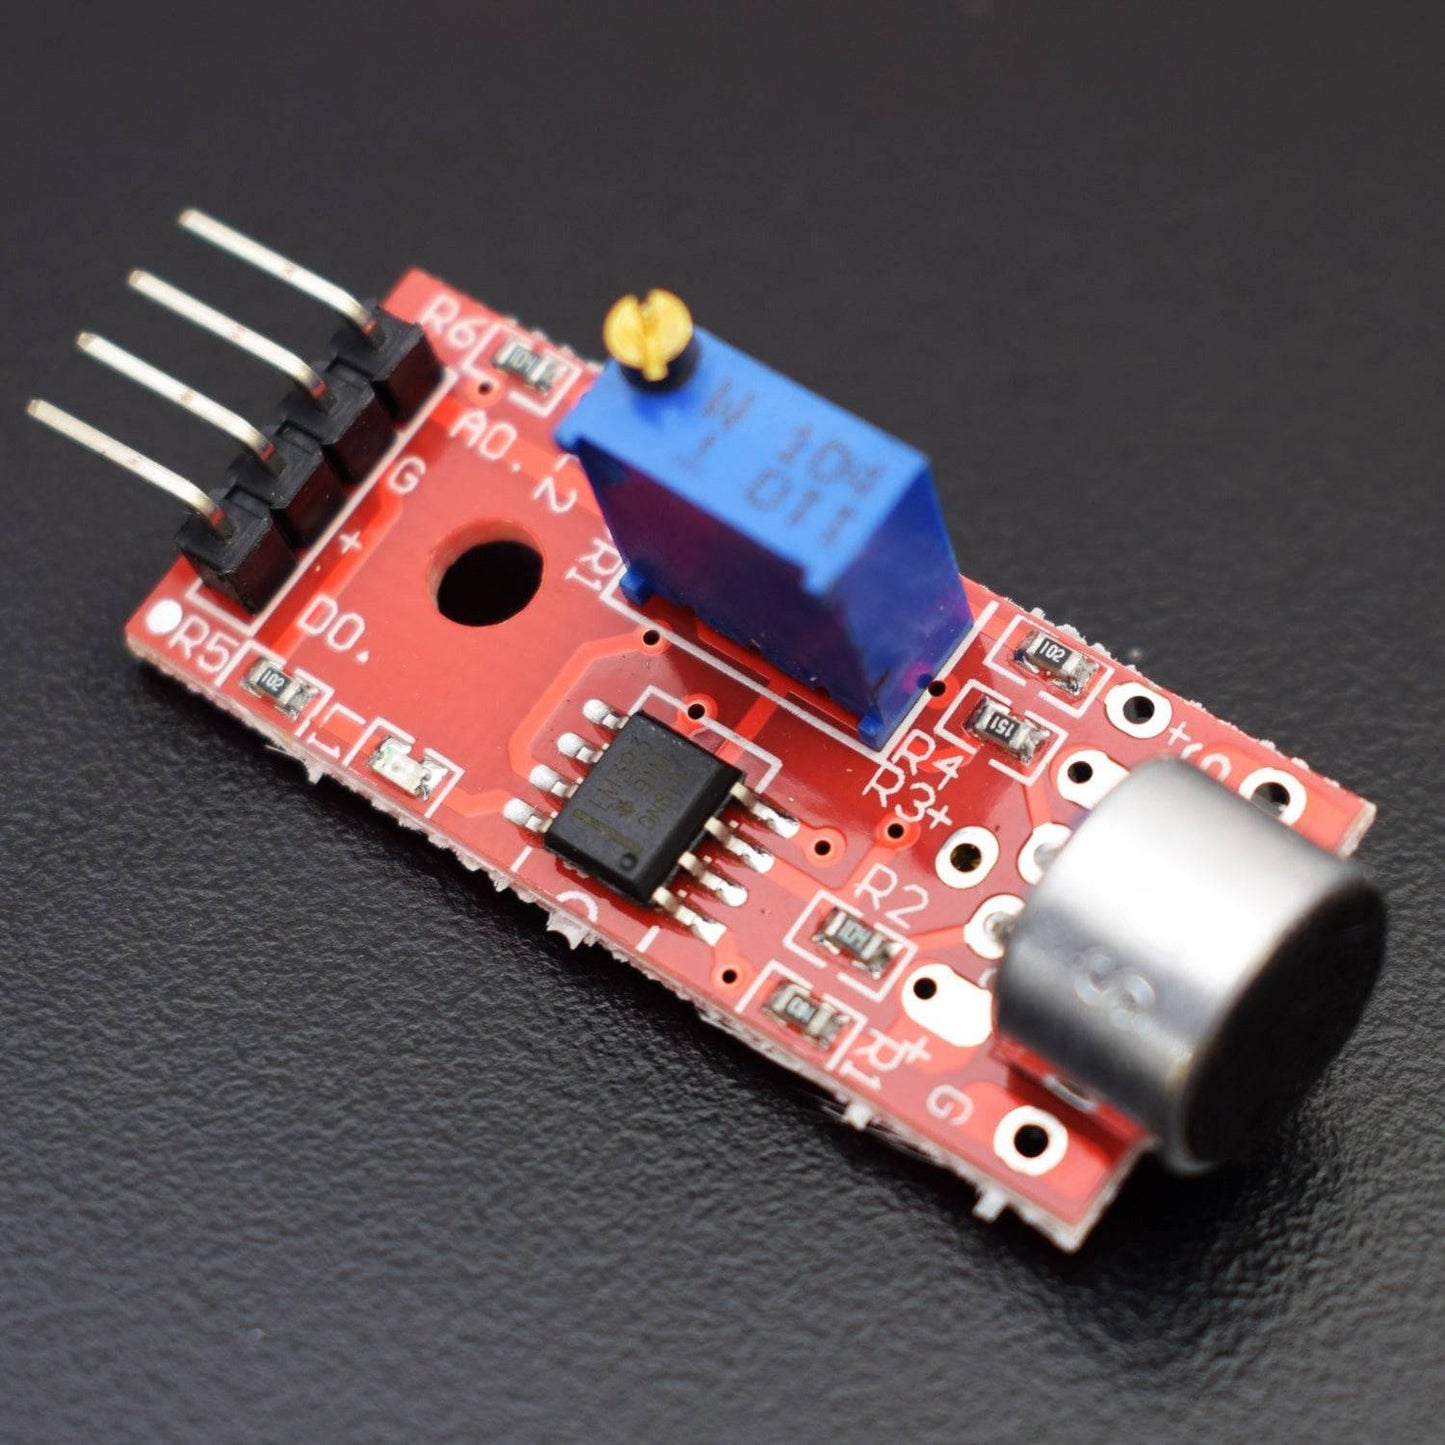 Sound Voice Audio Detection Sensor Module Microphone for Arduino/Raspberry Pi 8051- RC004 - REES52